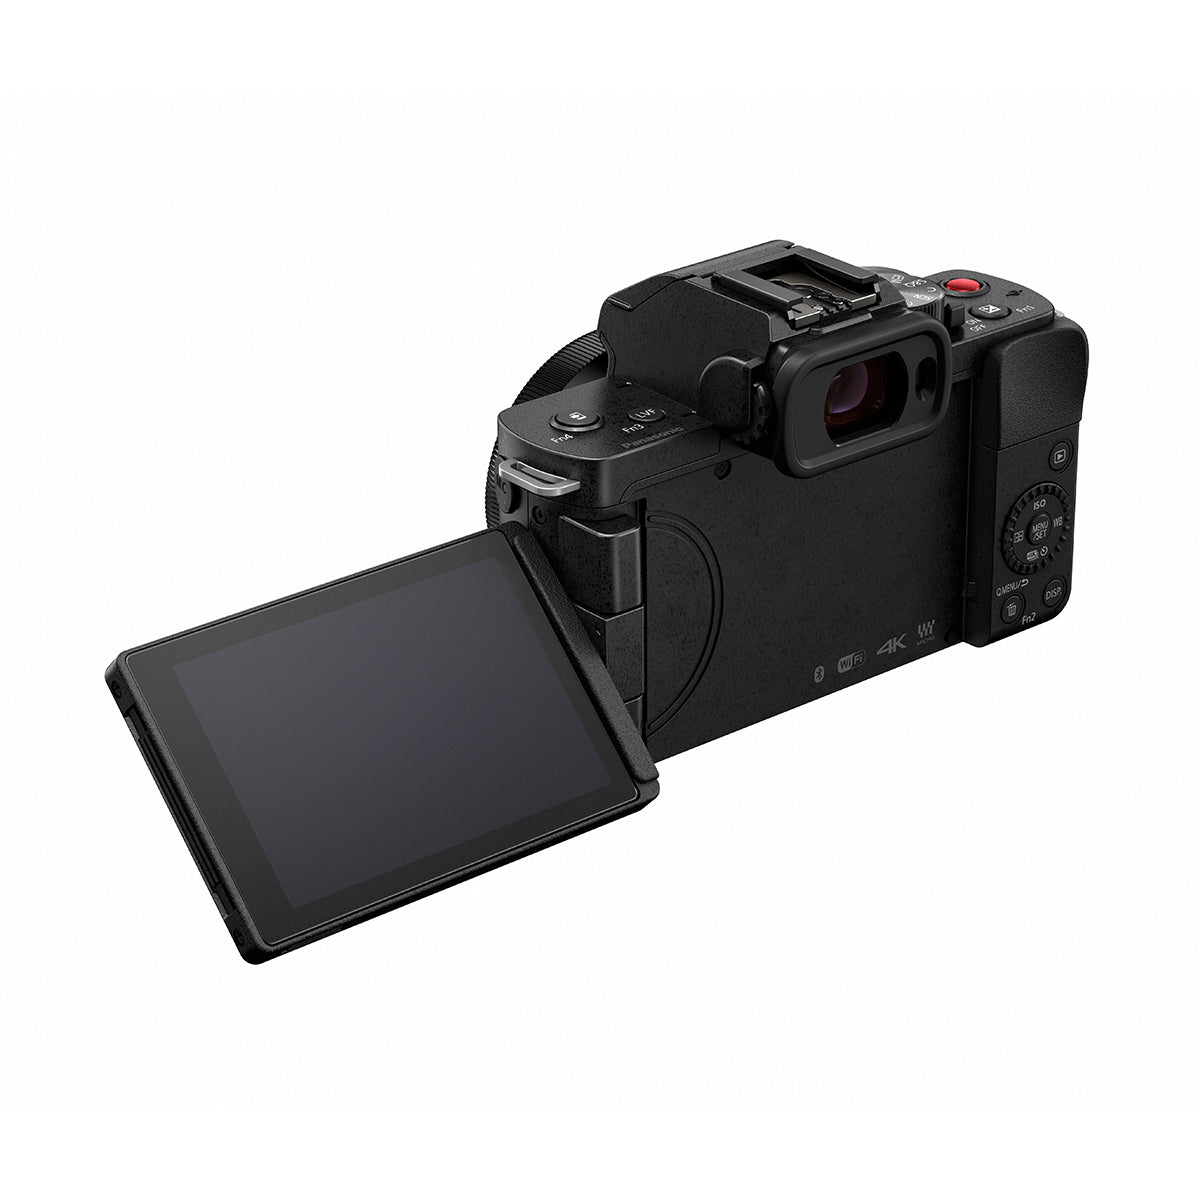 Panasonic Lumix DC-G100 Mirrorless Digital Camera with 12-32mm Lens and Tripod Grip Kit